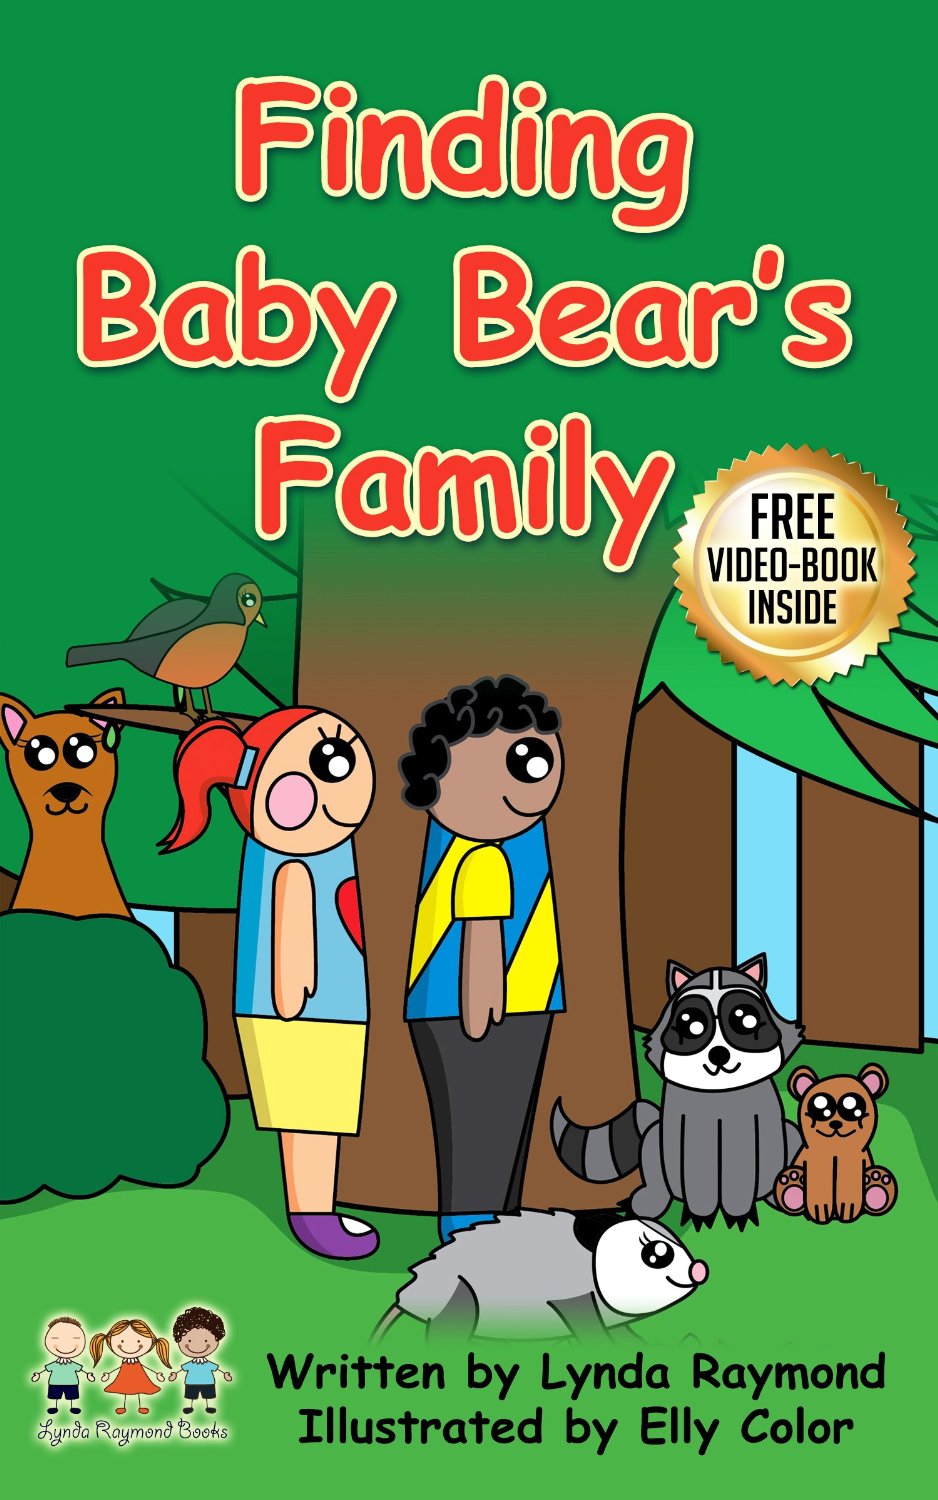 Finding Baby Bear’s Family by Brenda Maxfield